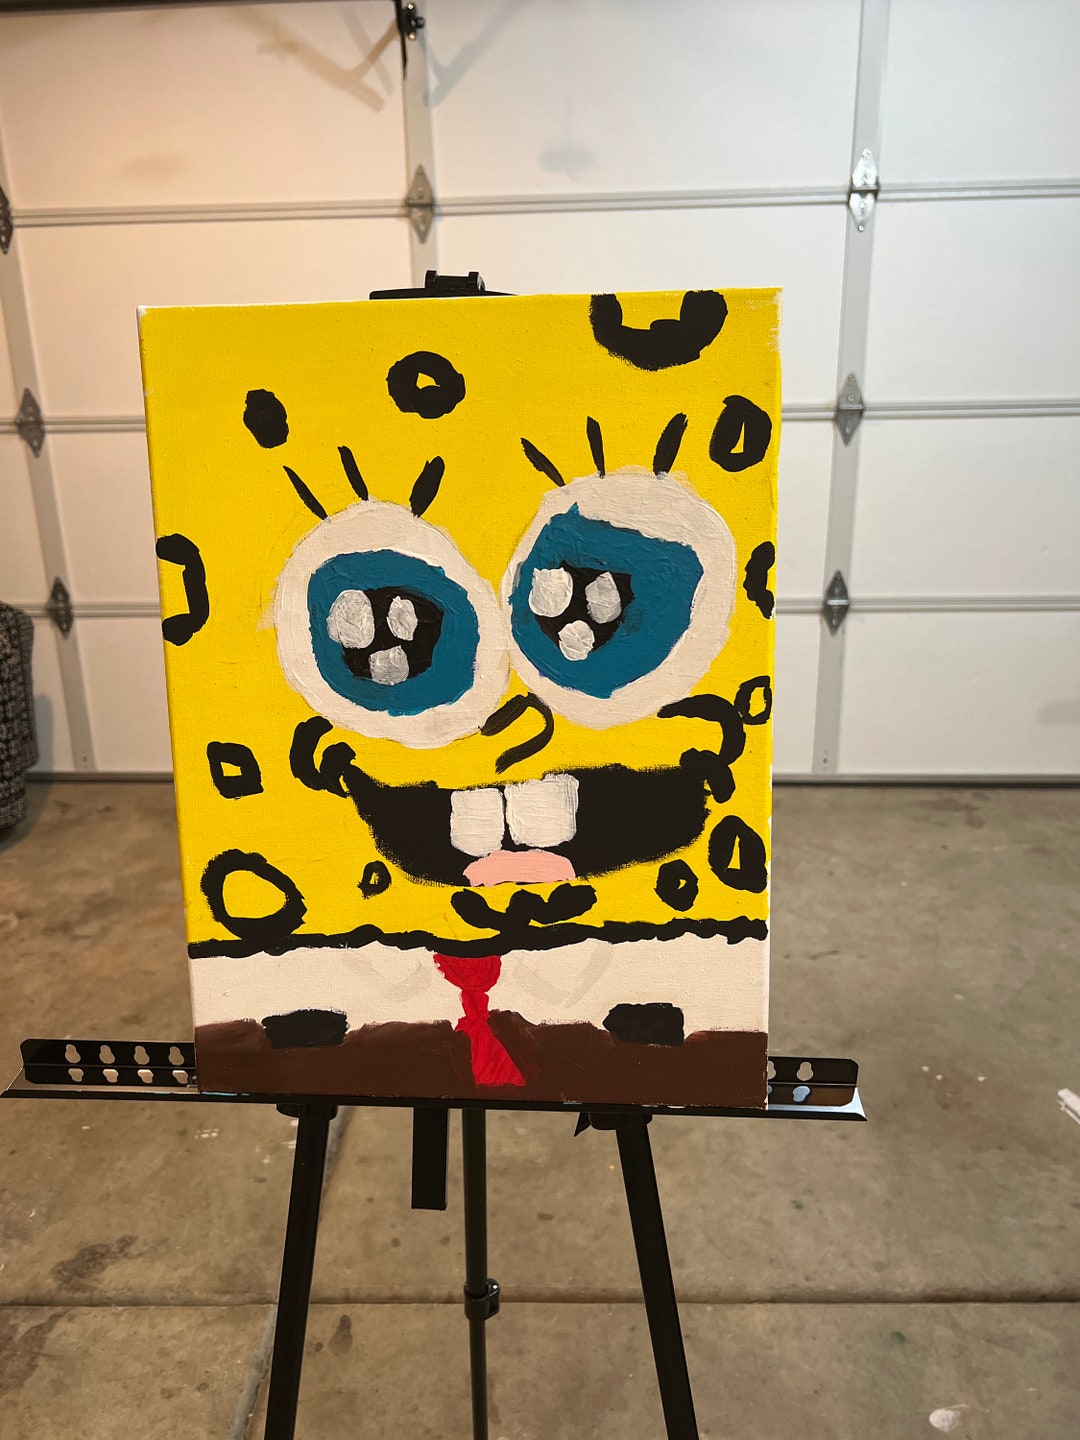 A Spongebob Painting - Etsy